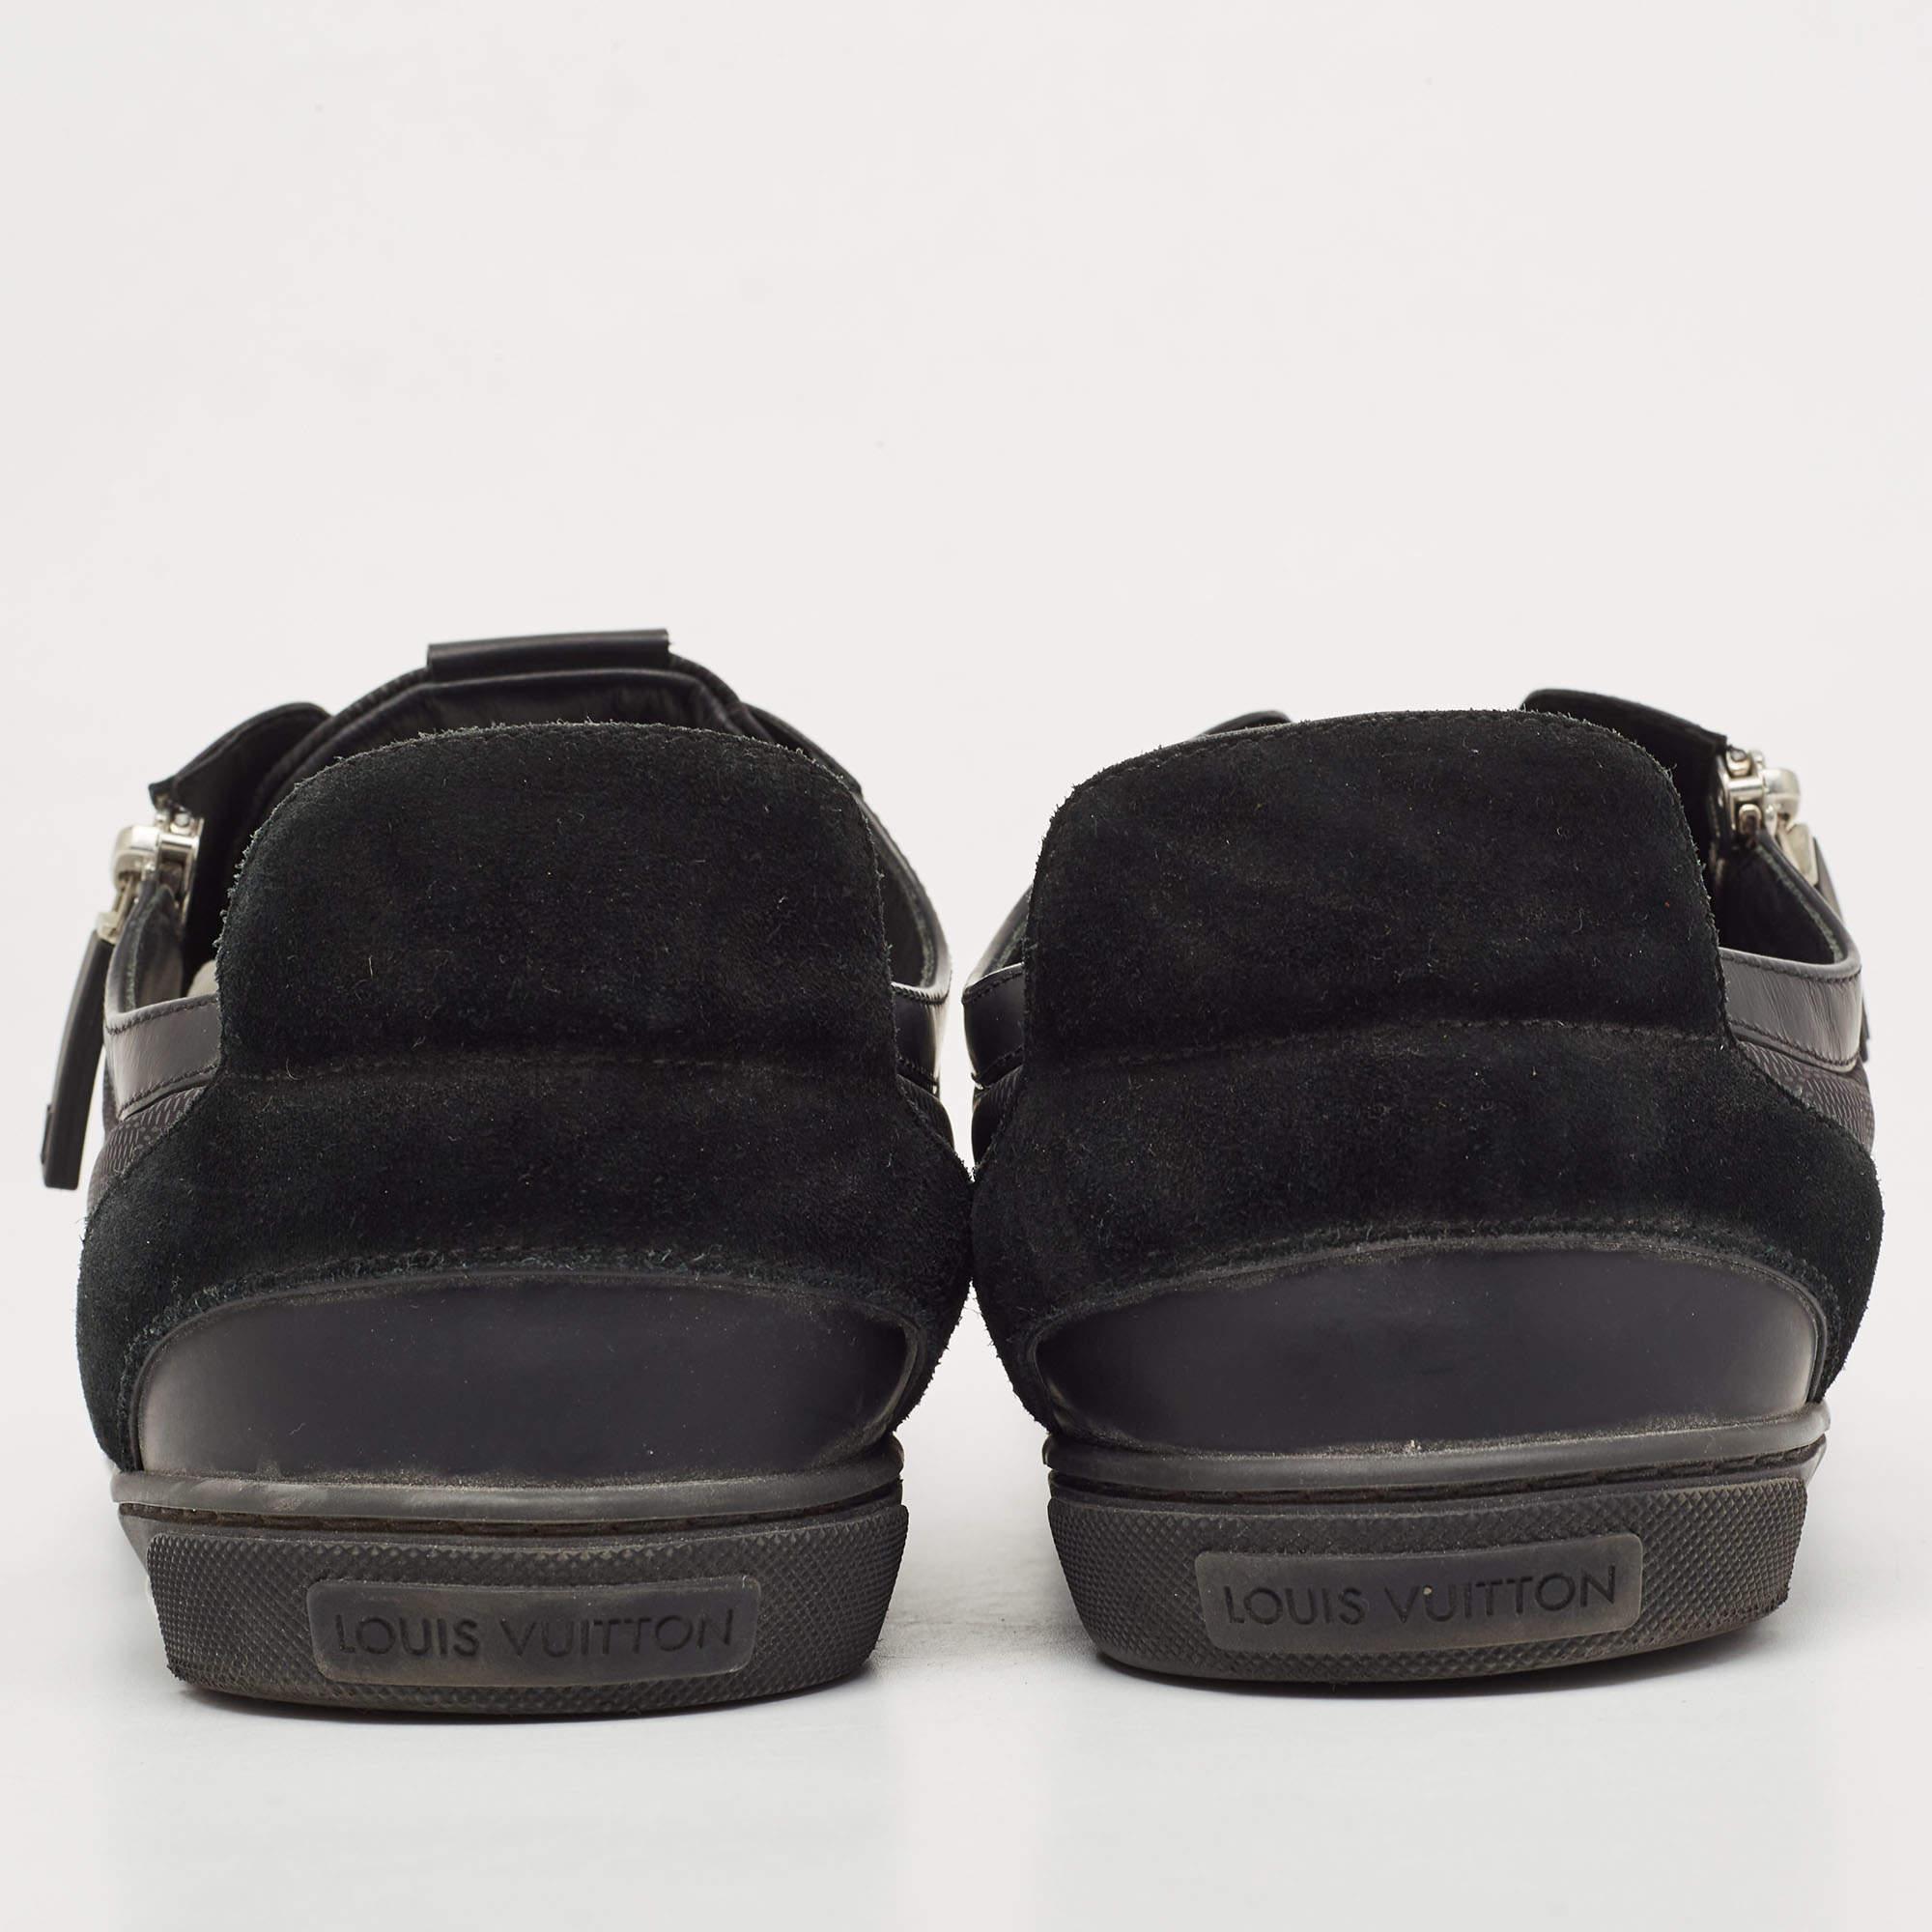 Louis Vuitton Black Damier Ebene Nylon and Leather Sneakers Size 43 2